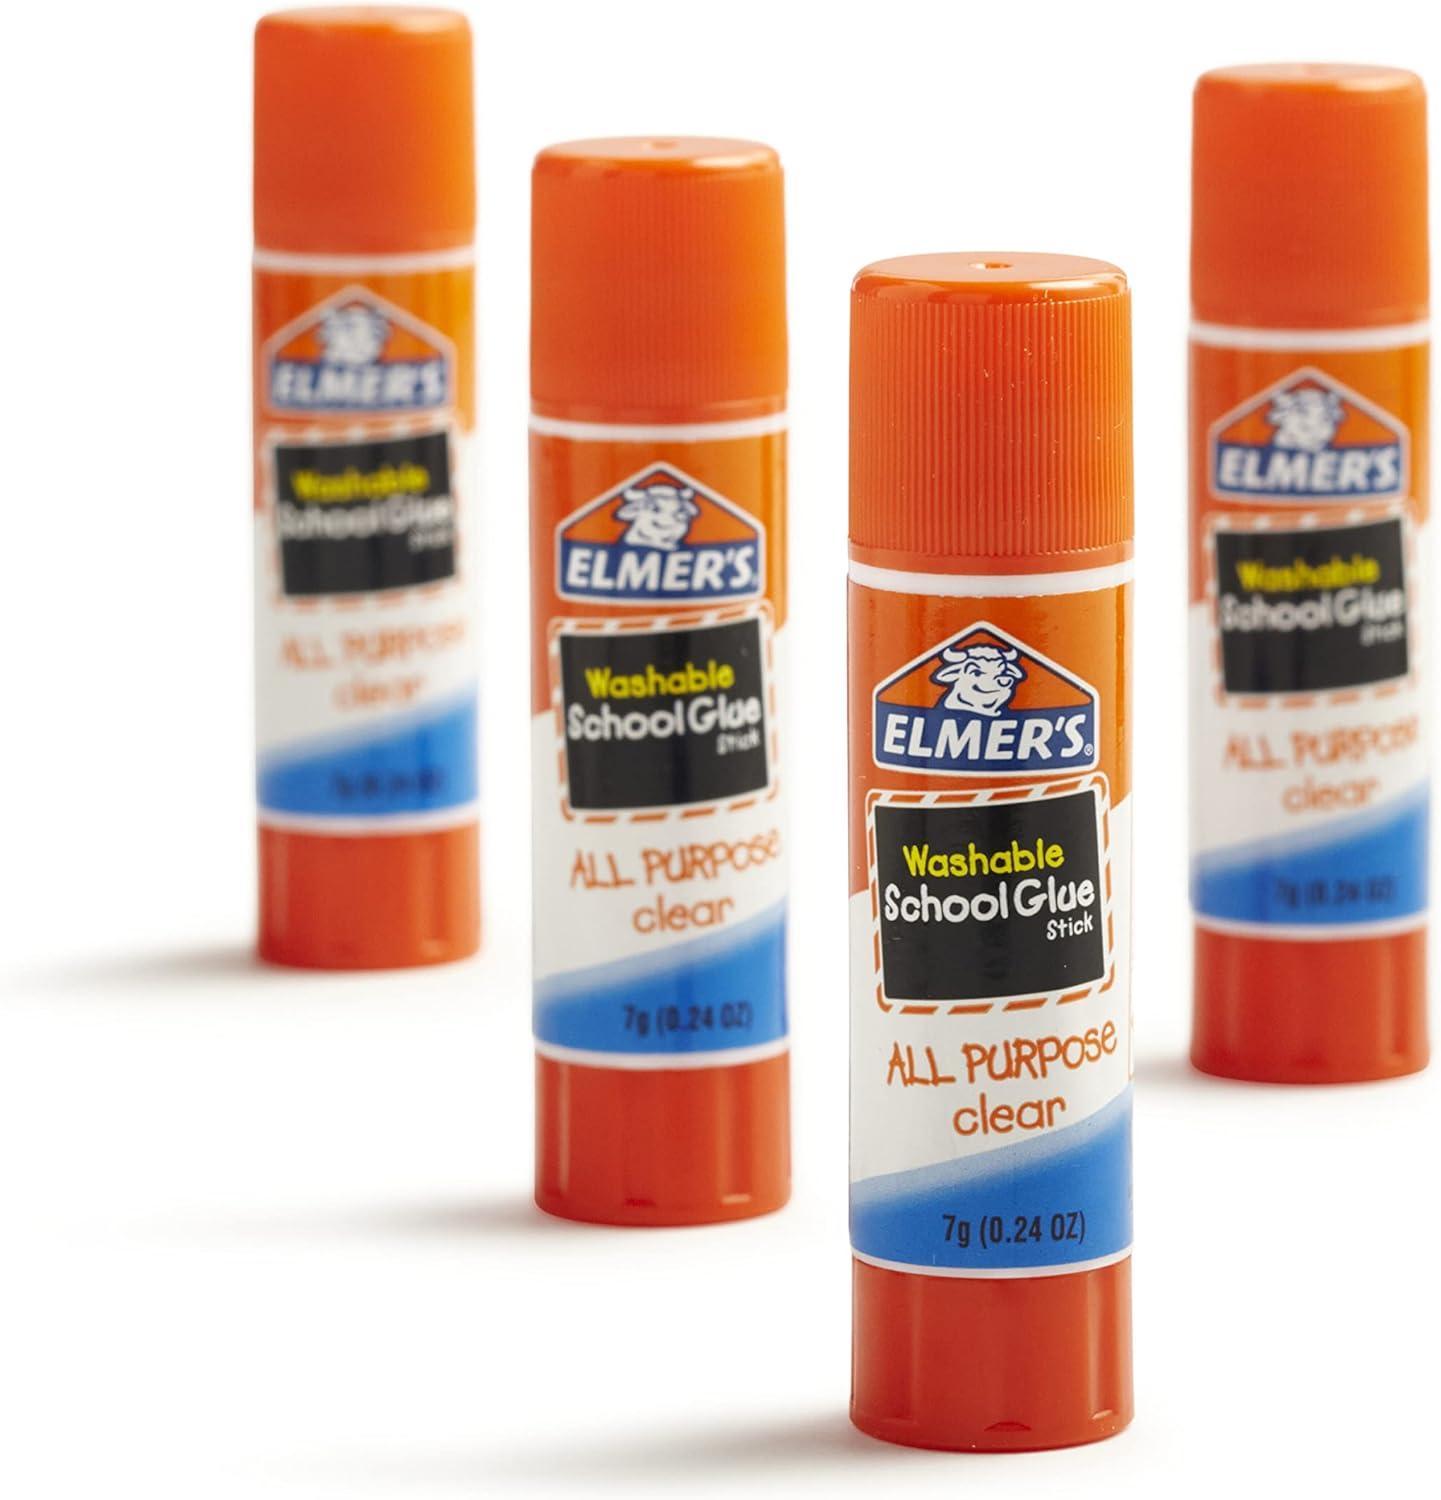 Elmer's All Purpose School Glue Sticks Clear Washable 4 Pack 0.24-ounce  sticks Standard Stick 4 Count